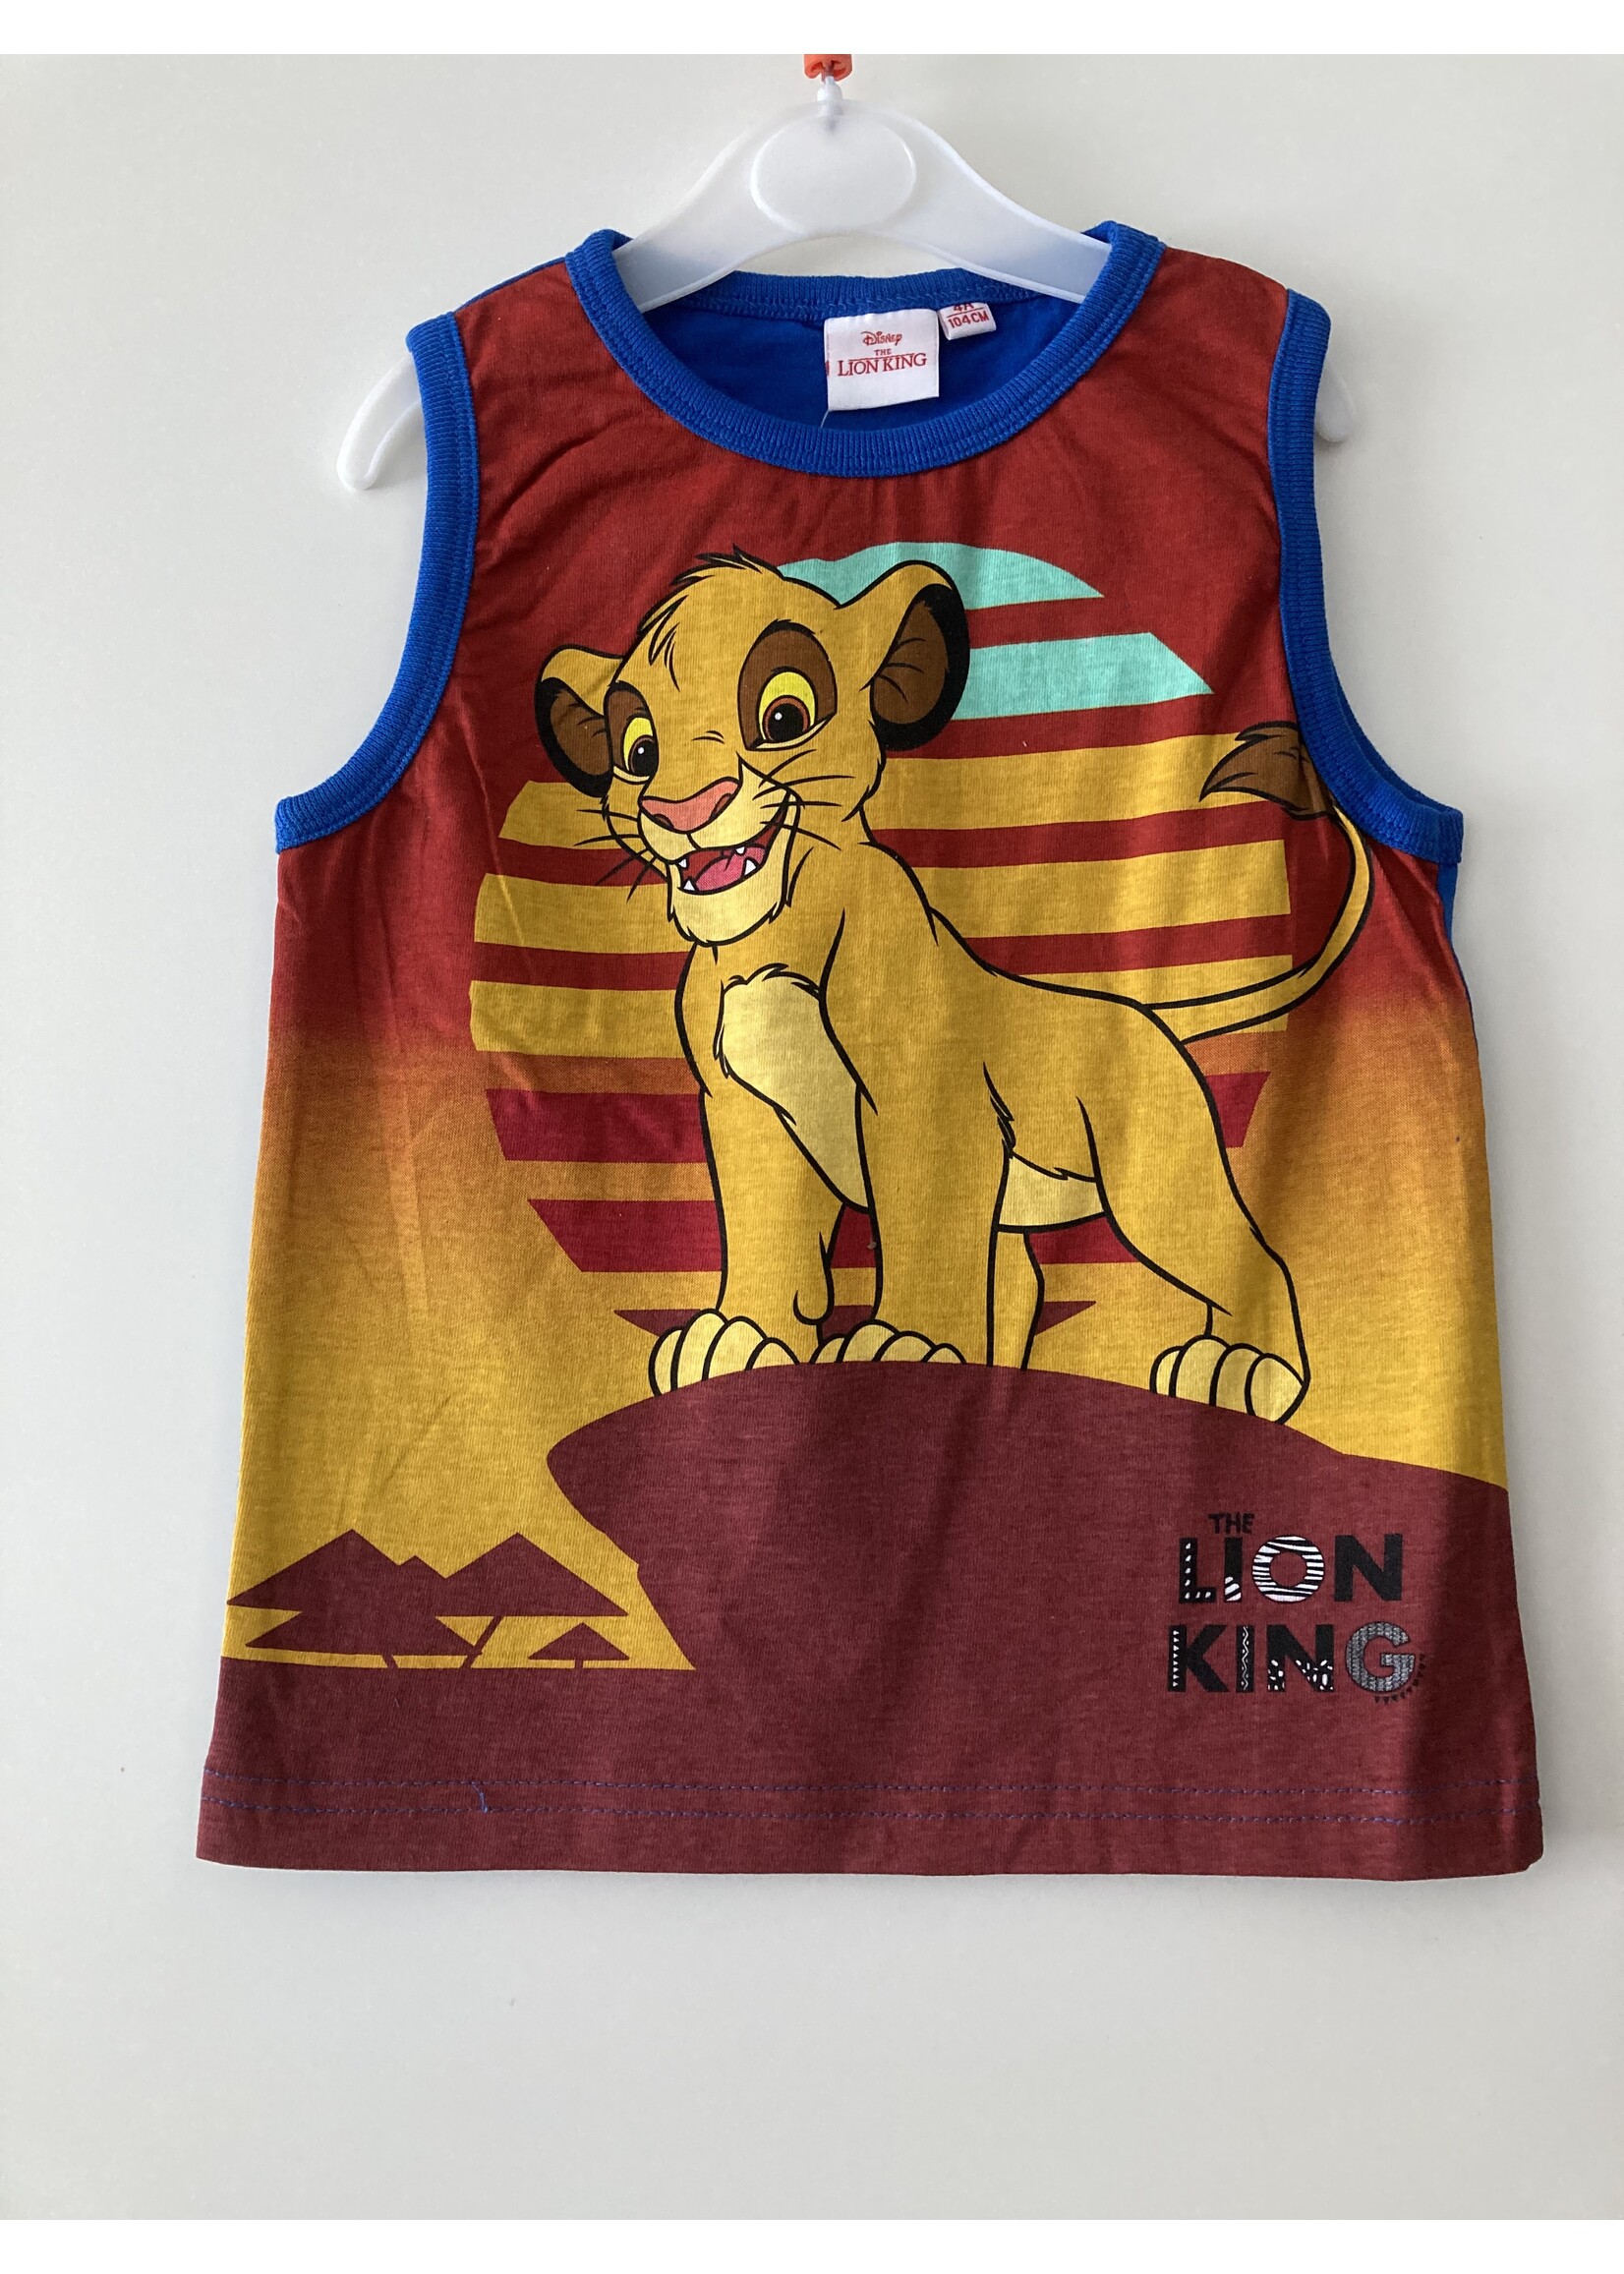 Disney Lion King sleeveless shirt from Disney red